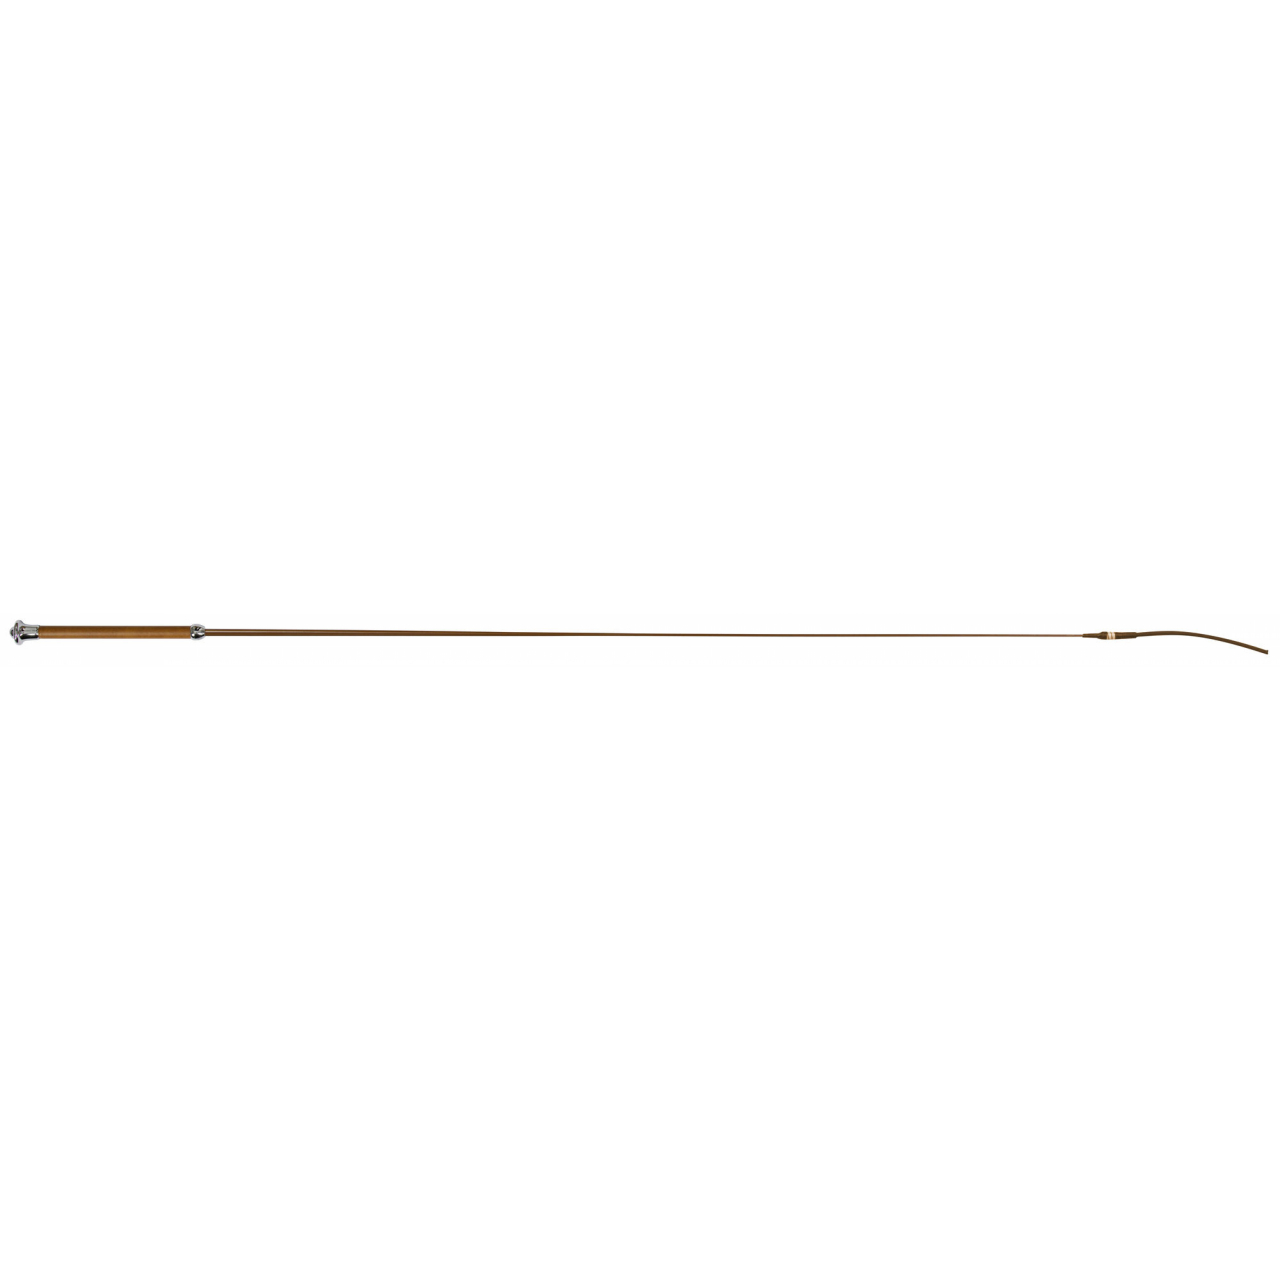 Covalliero díjlovas pálca műbőr borítással - barna, 120 cm